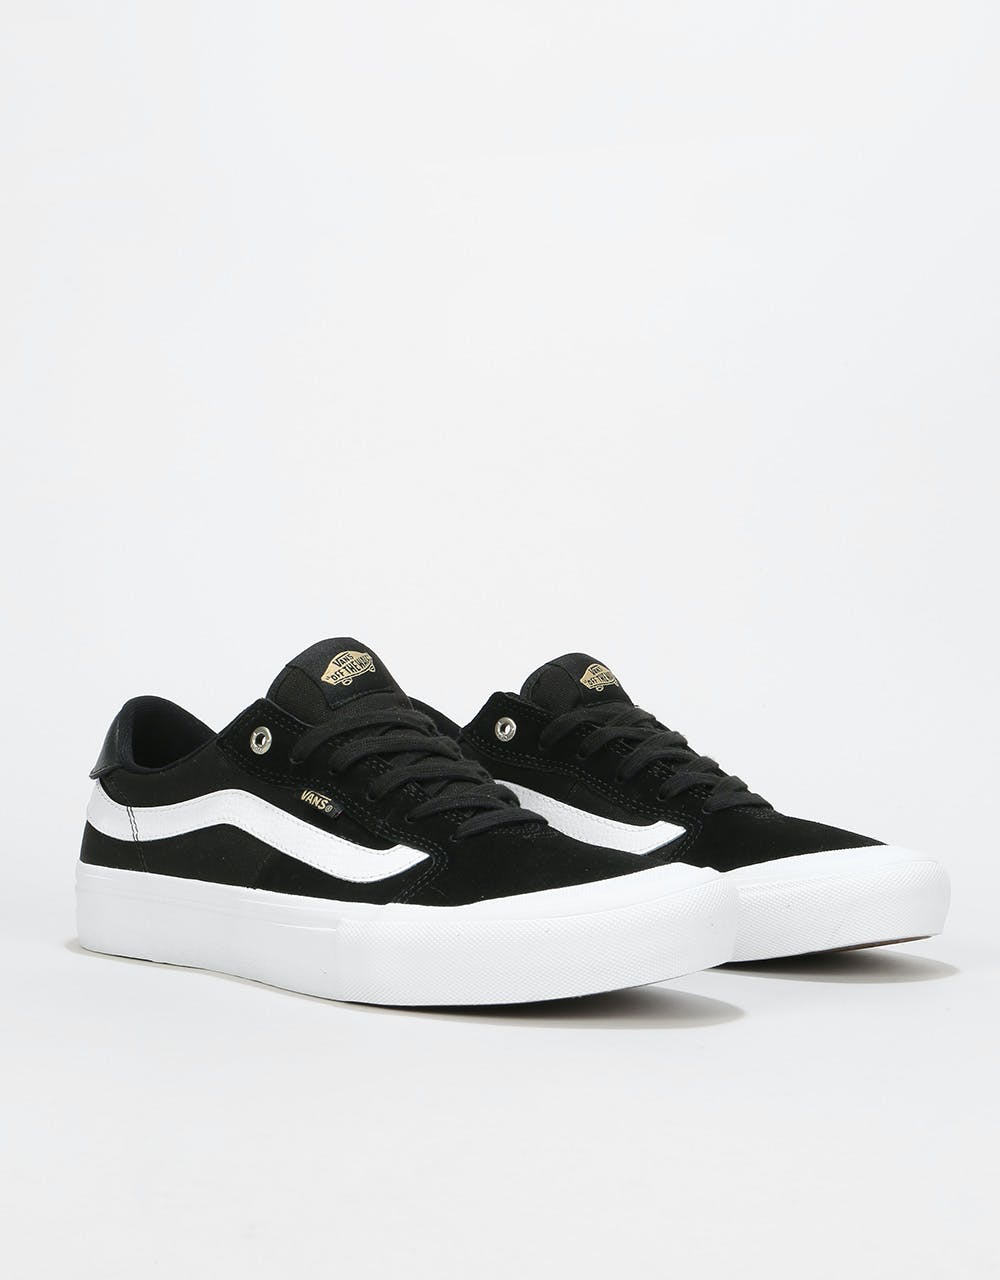 Vans Style 112 Pro Skate Shoes - Black/White/Khaki